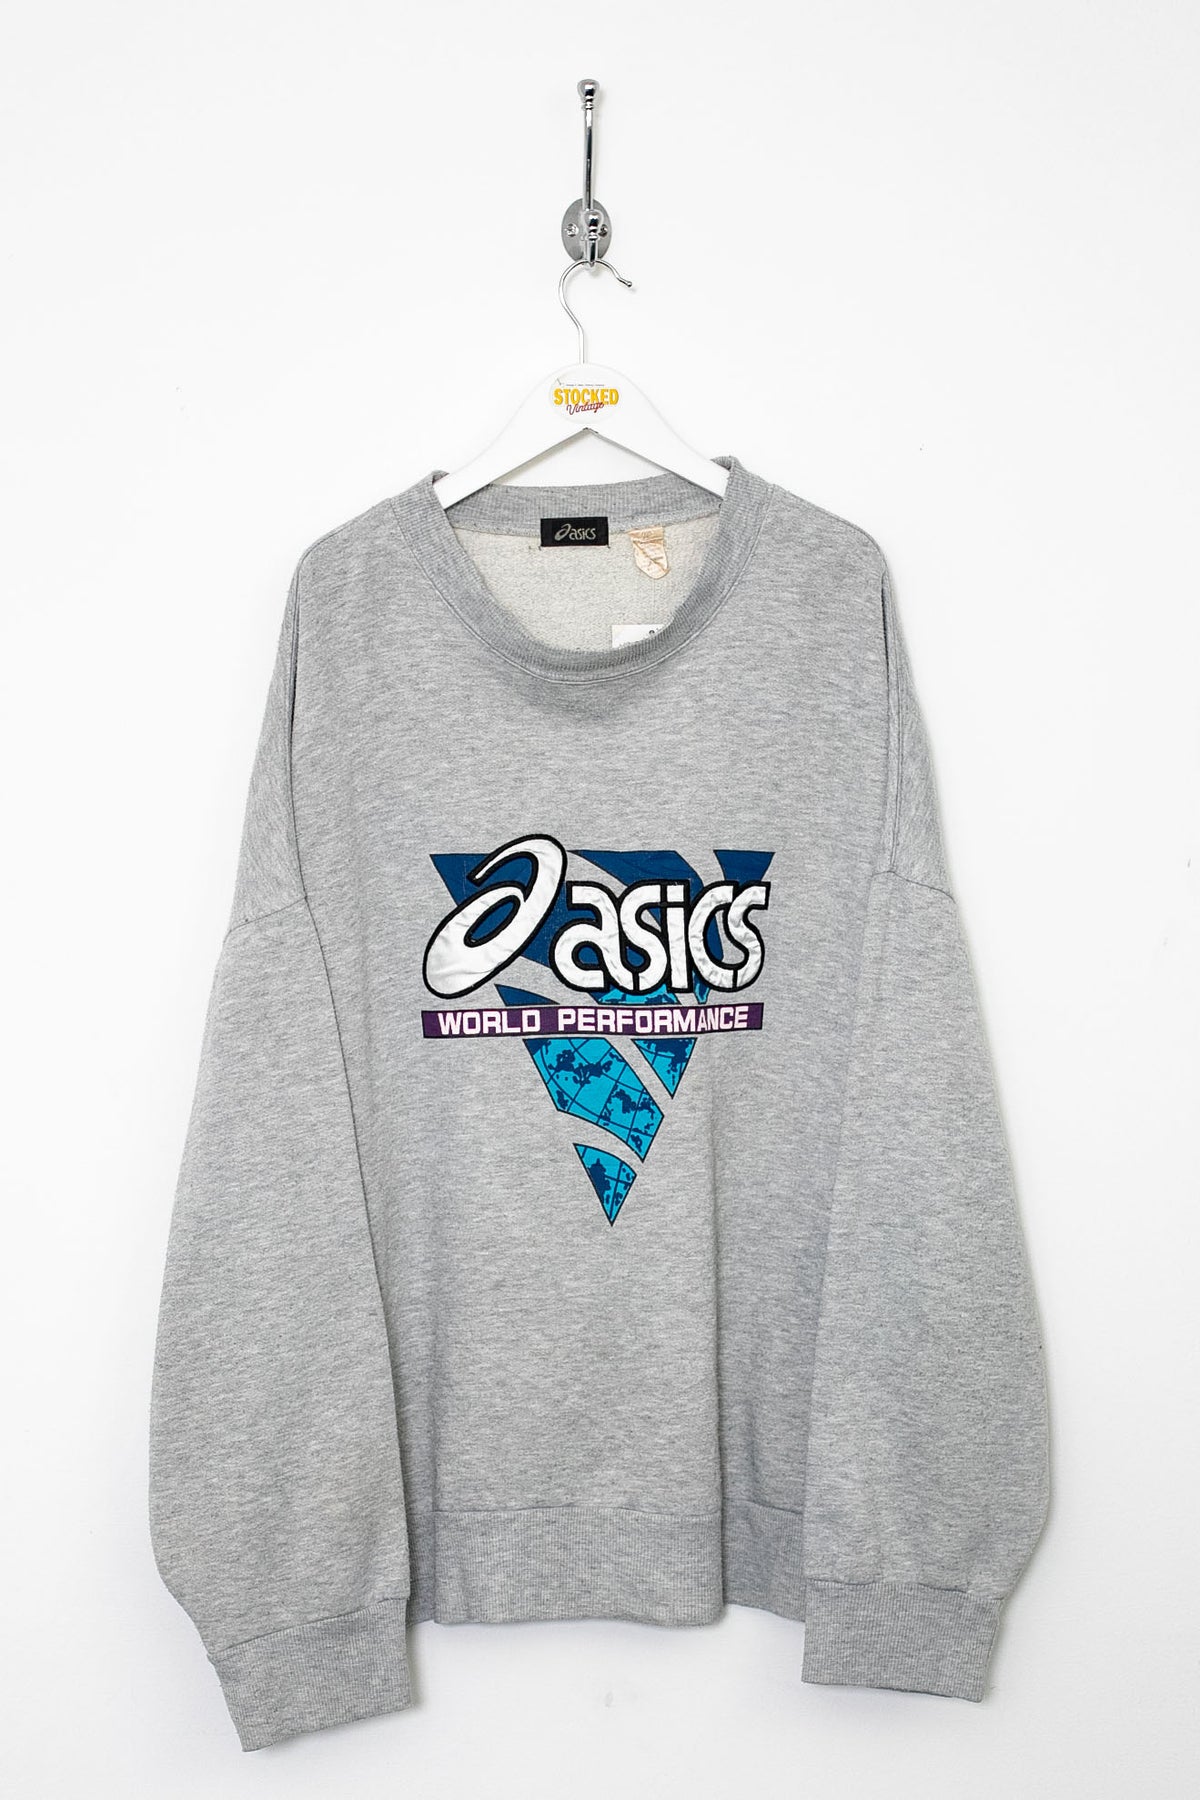 00s Asics Sweatshirt (XXL)